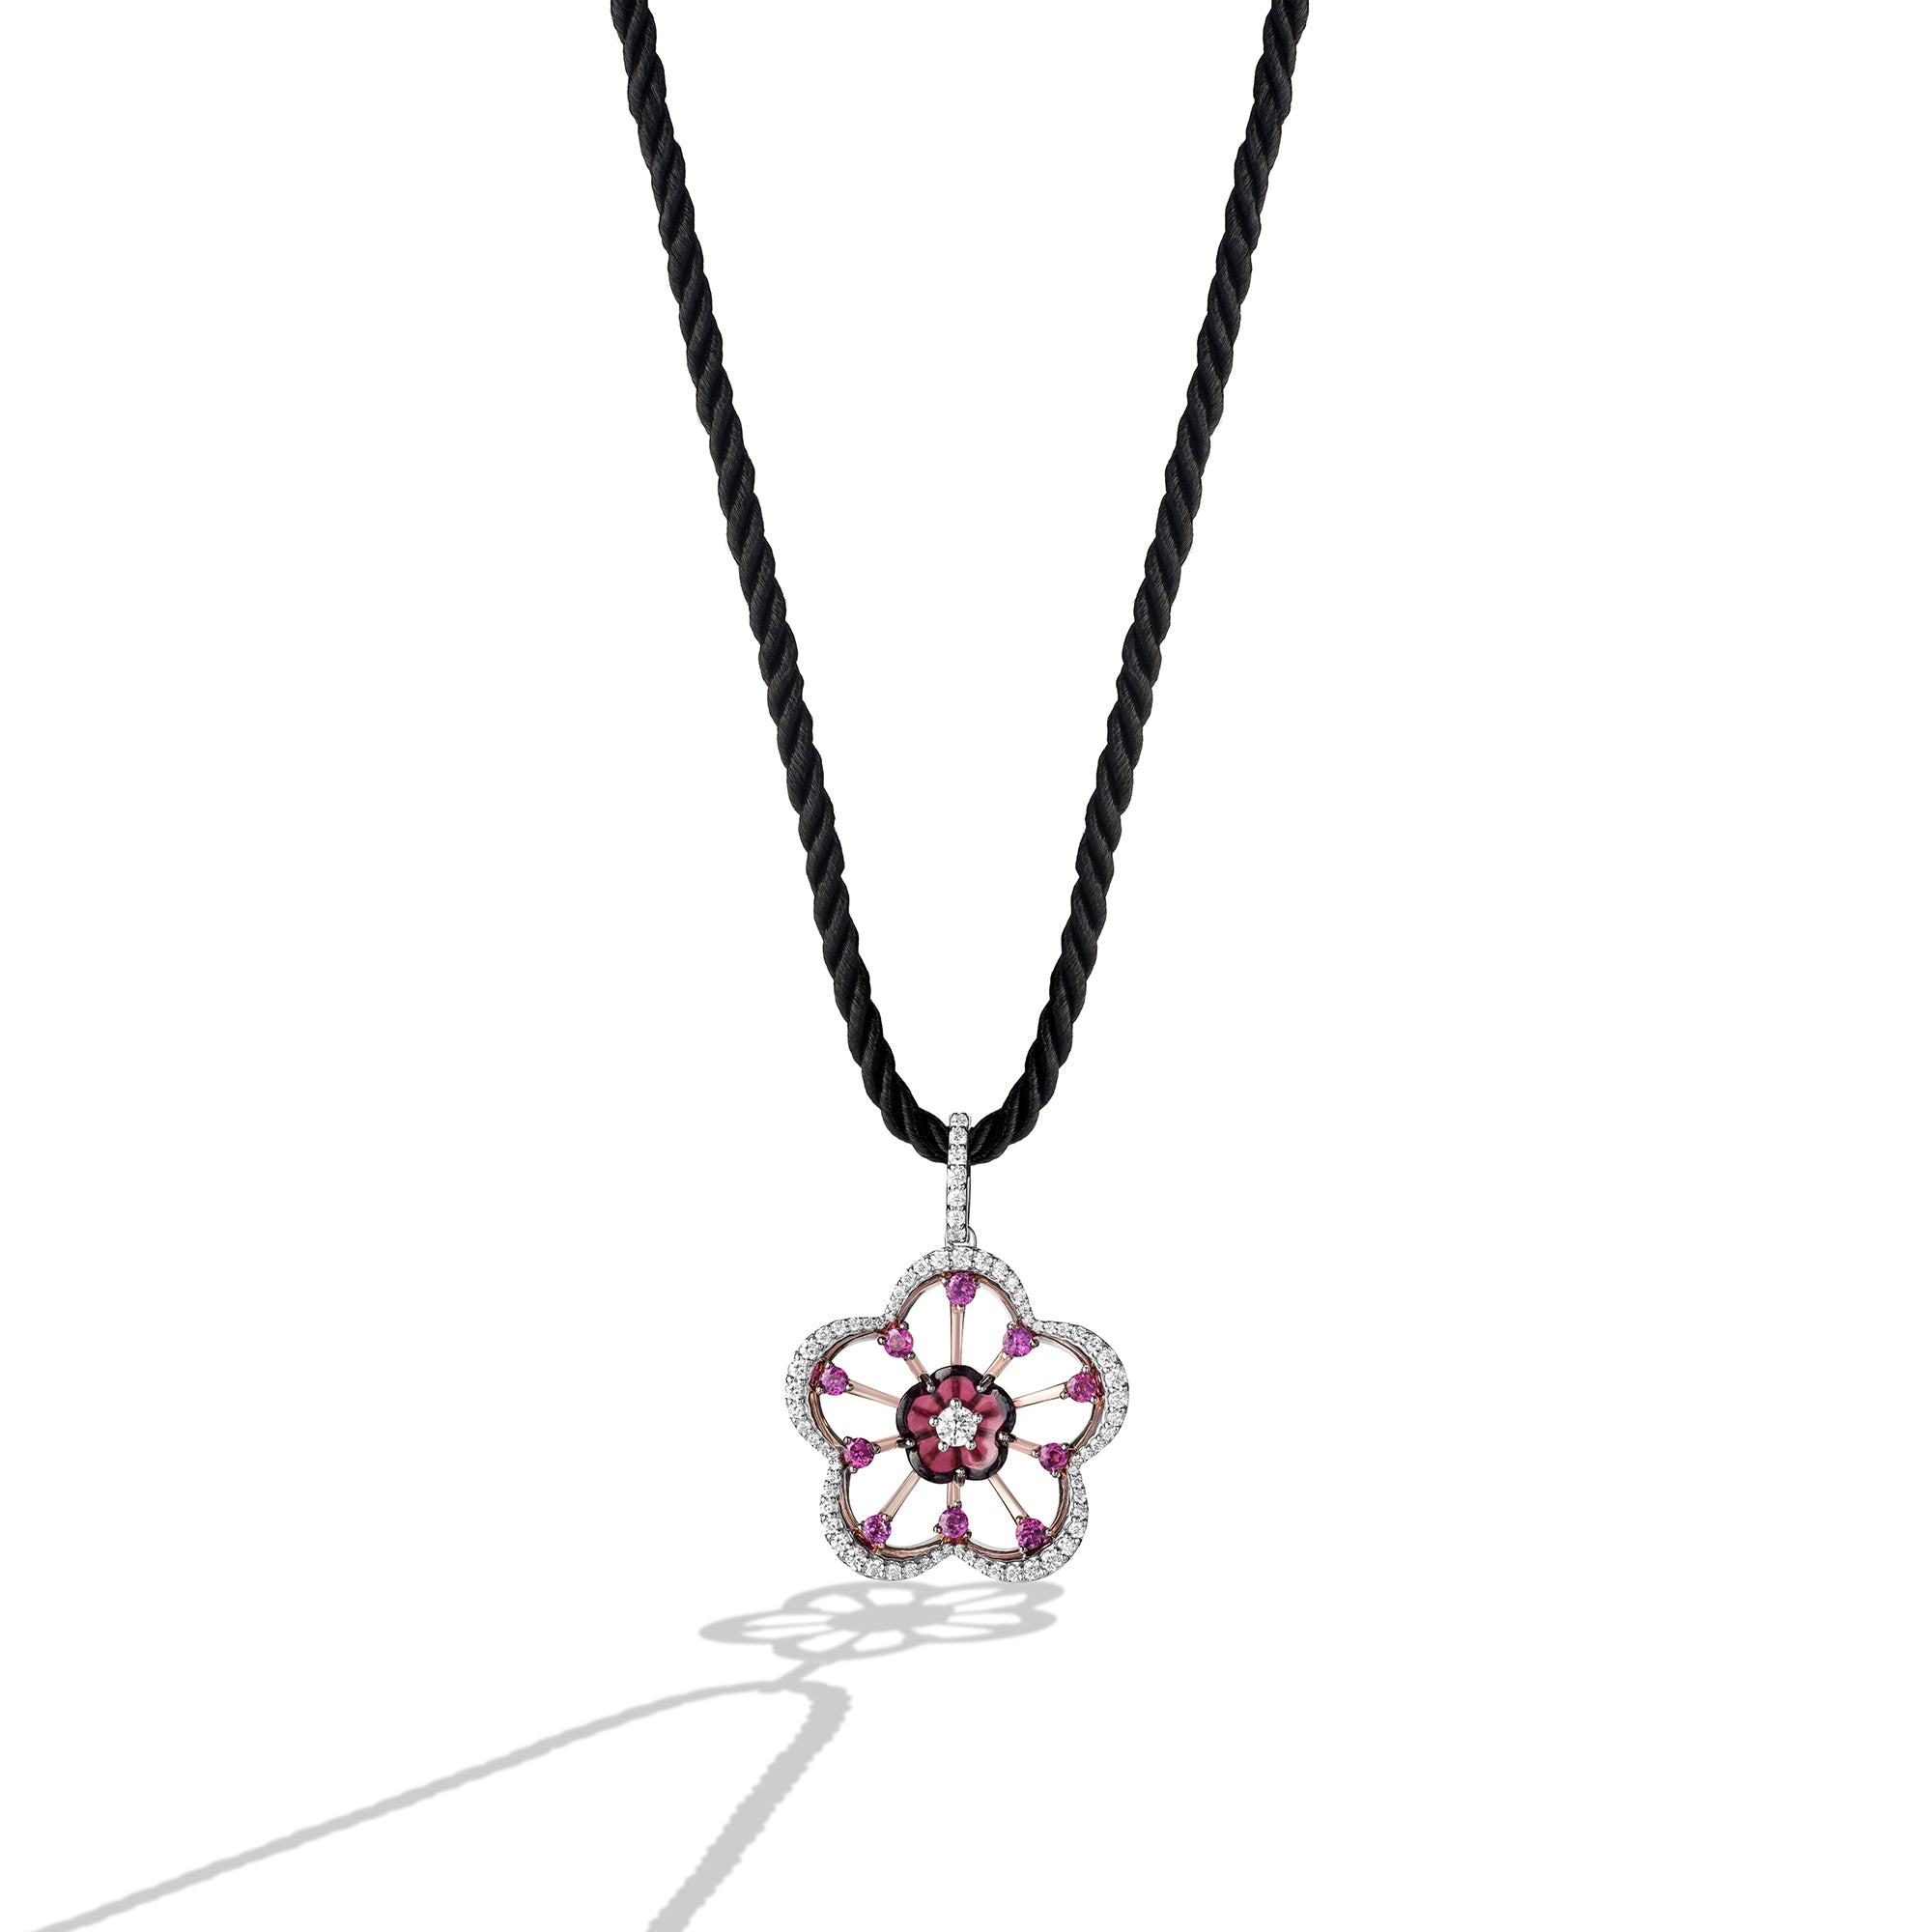 1 PANDORA Necklace. NECKLACE LENGTH. 45 cm / 17.7 in, adjustable. | Pandora  necklace, Necklace lengths, Daisy necklace